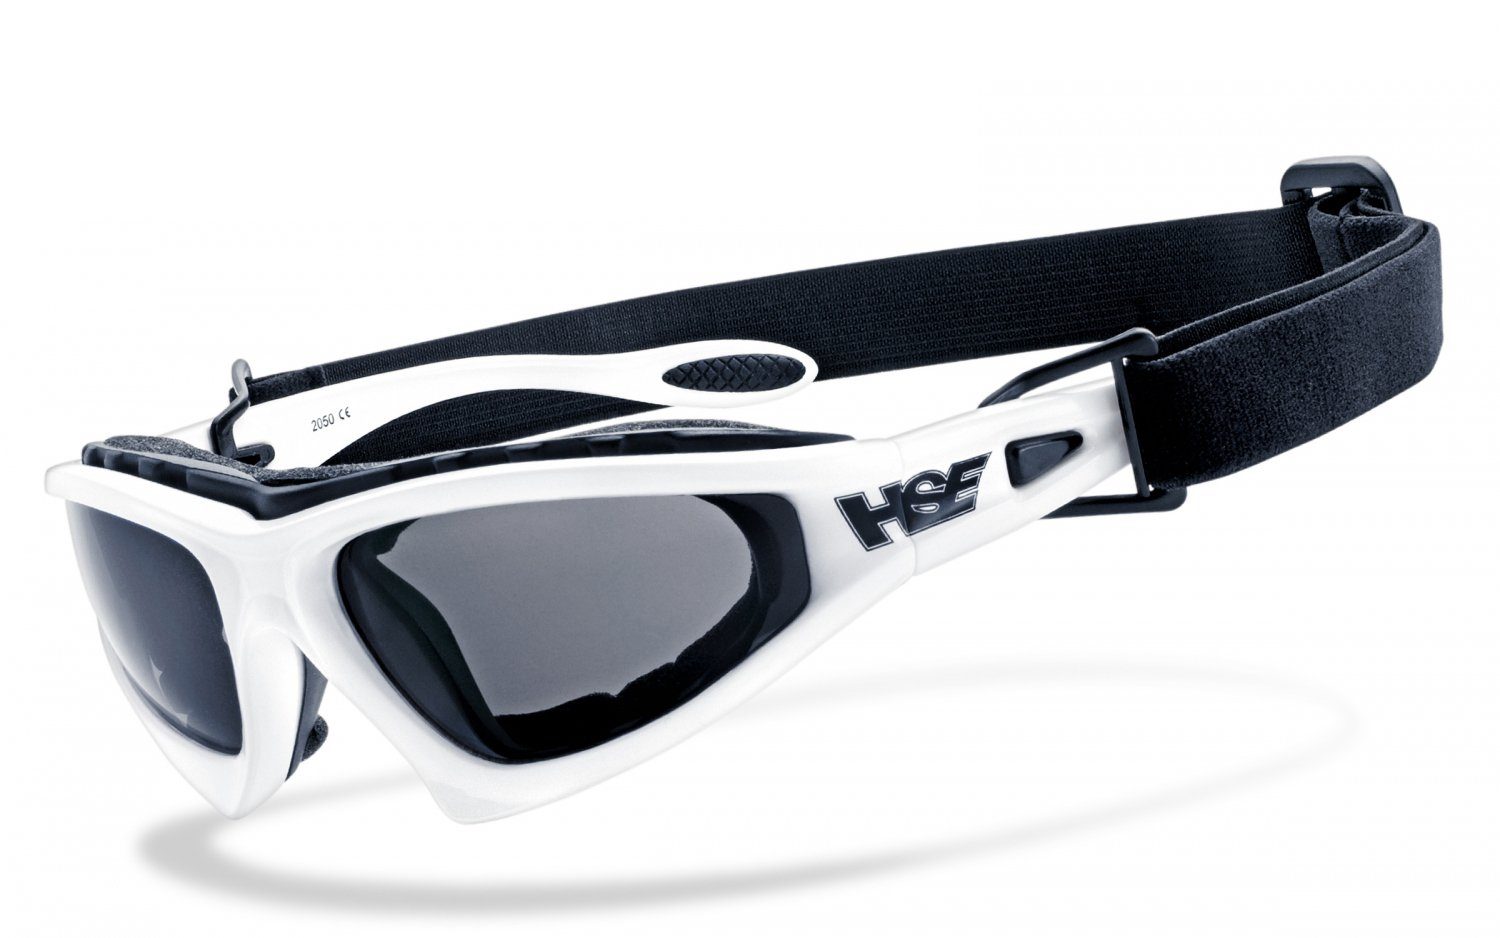 Motorradbrille HSE - FALCON-X selbsttönend, schnell Gläser SportEyes selbsttönende